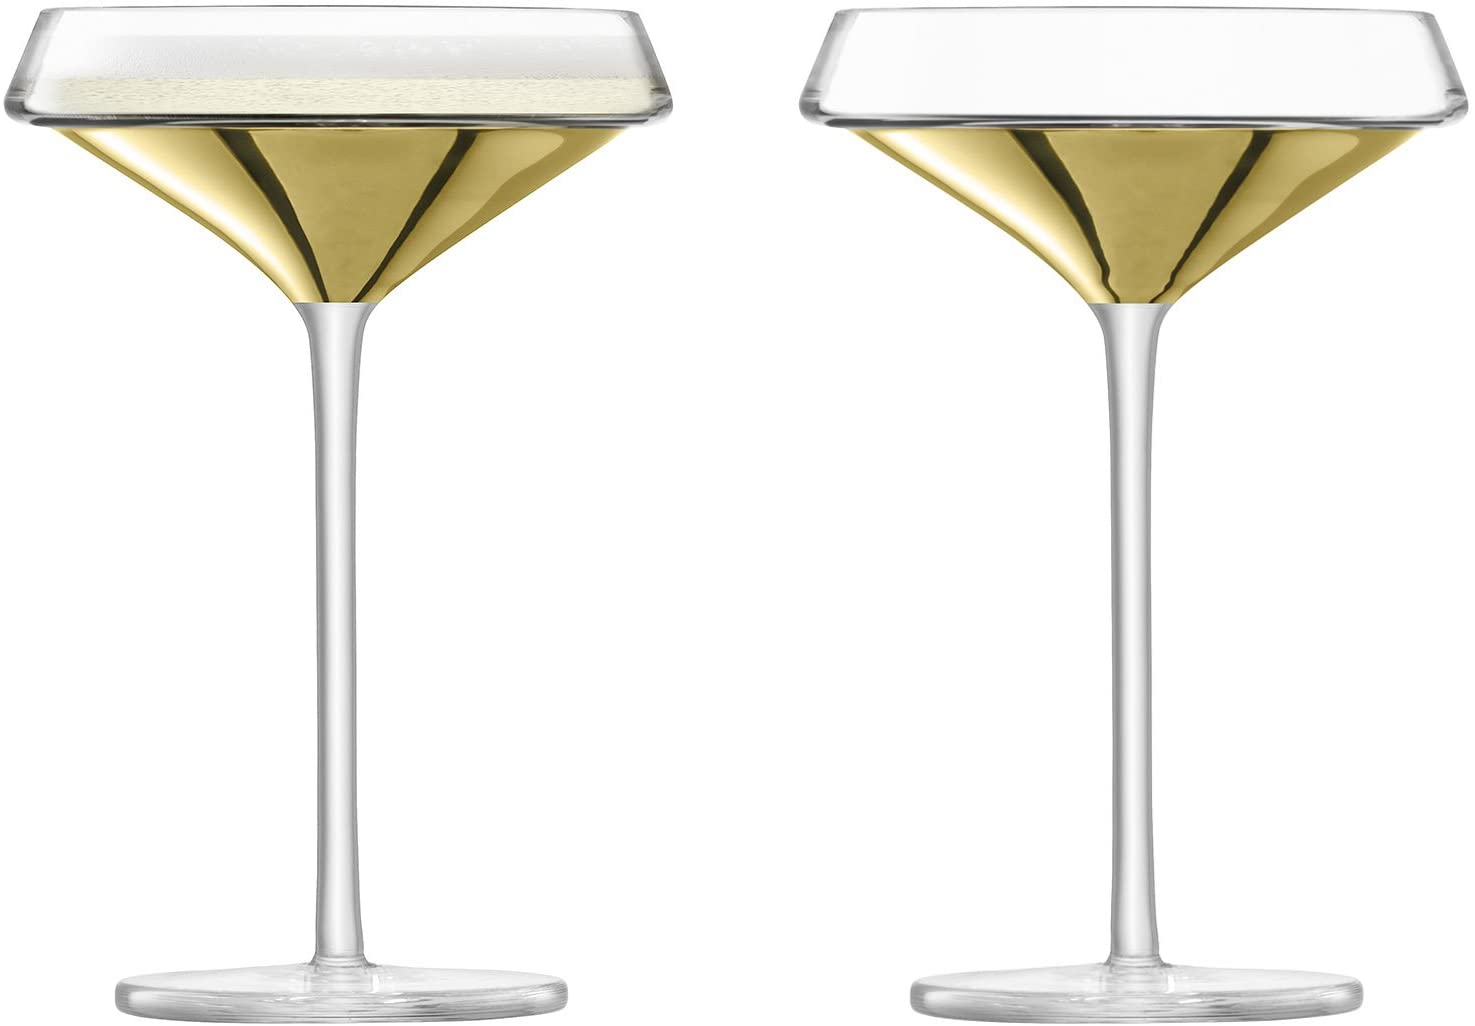 LSA International G1487-09-358 Platz Champagne / Cocktail Glass 240ml x 2, Gold